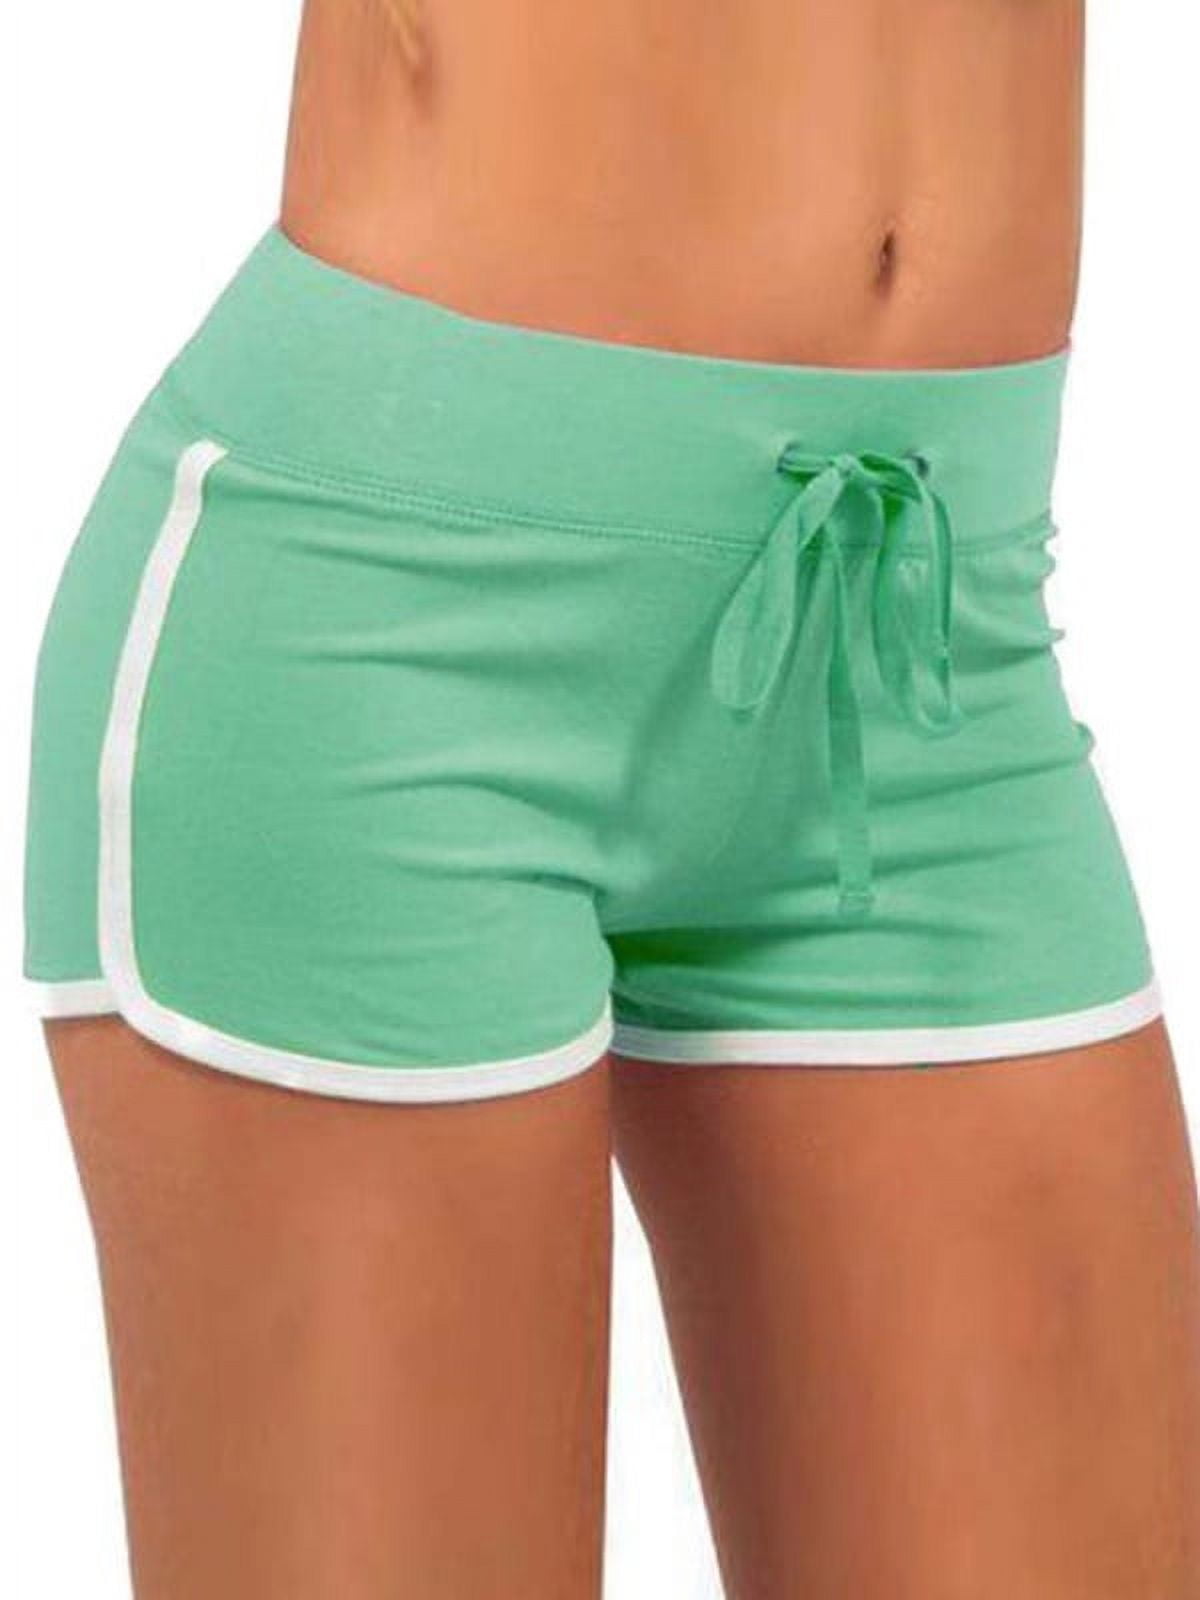 TOPGOD Women's Summer Casual Yoga Gym Shorts Activewear Lounge Shorts Cute  Beach Bottoms